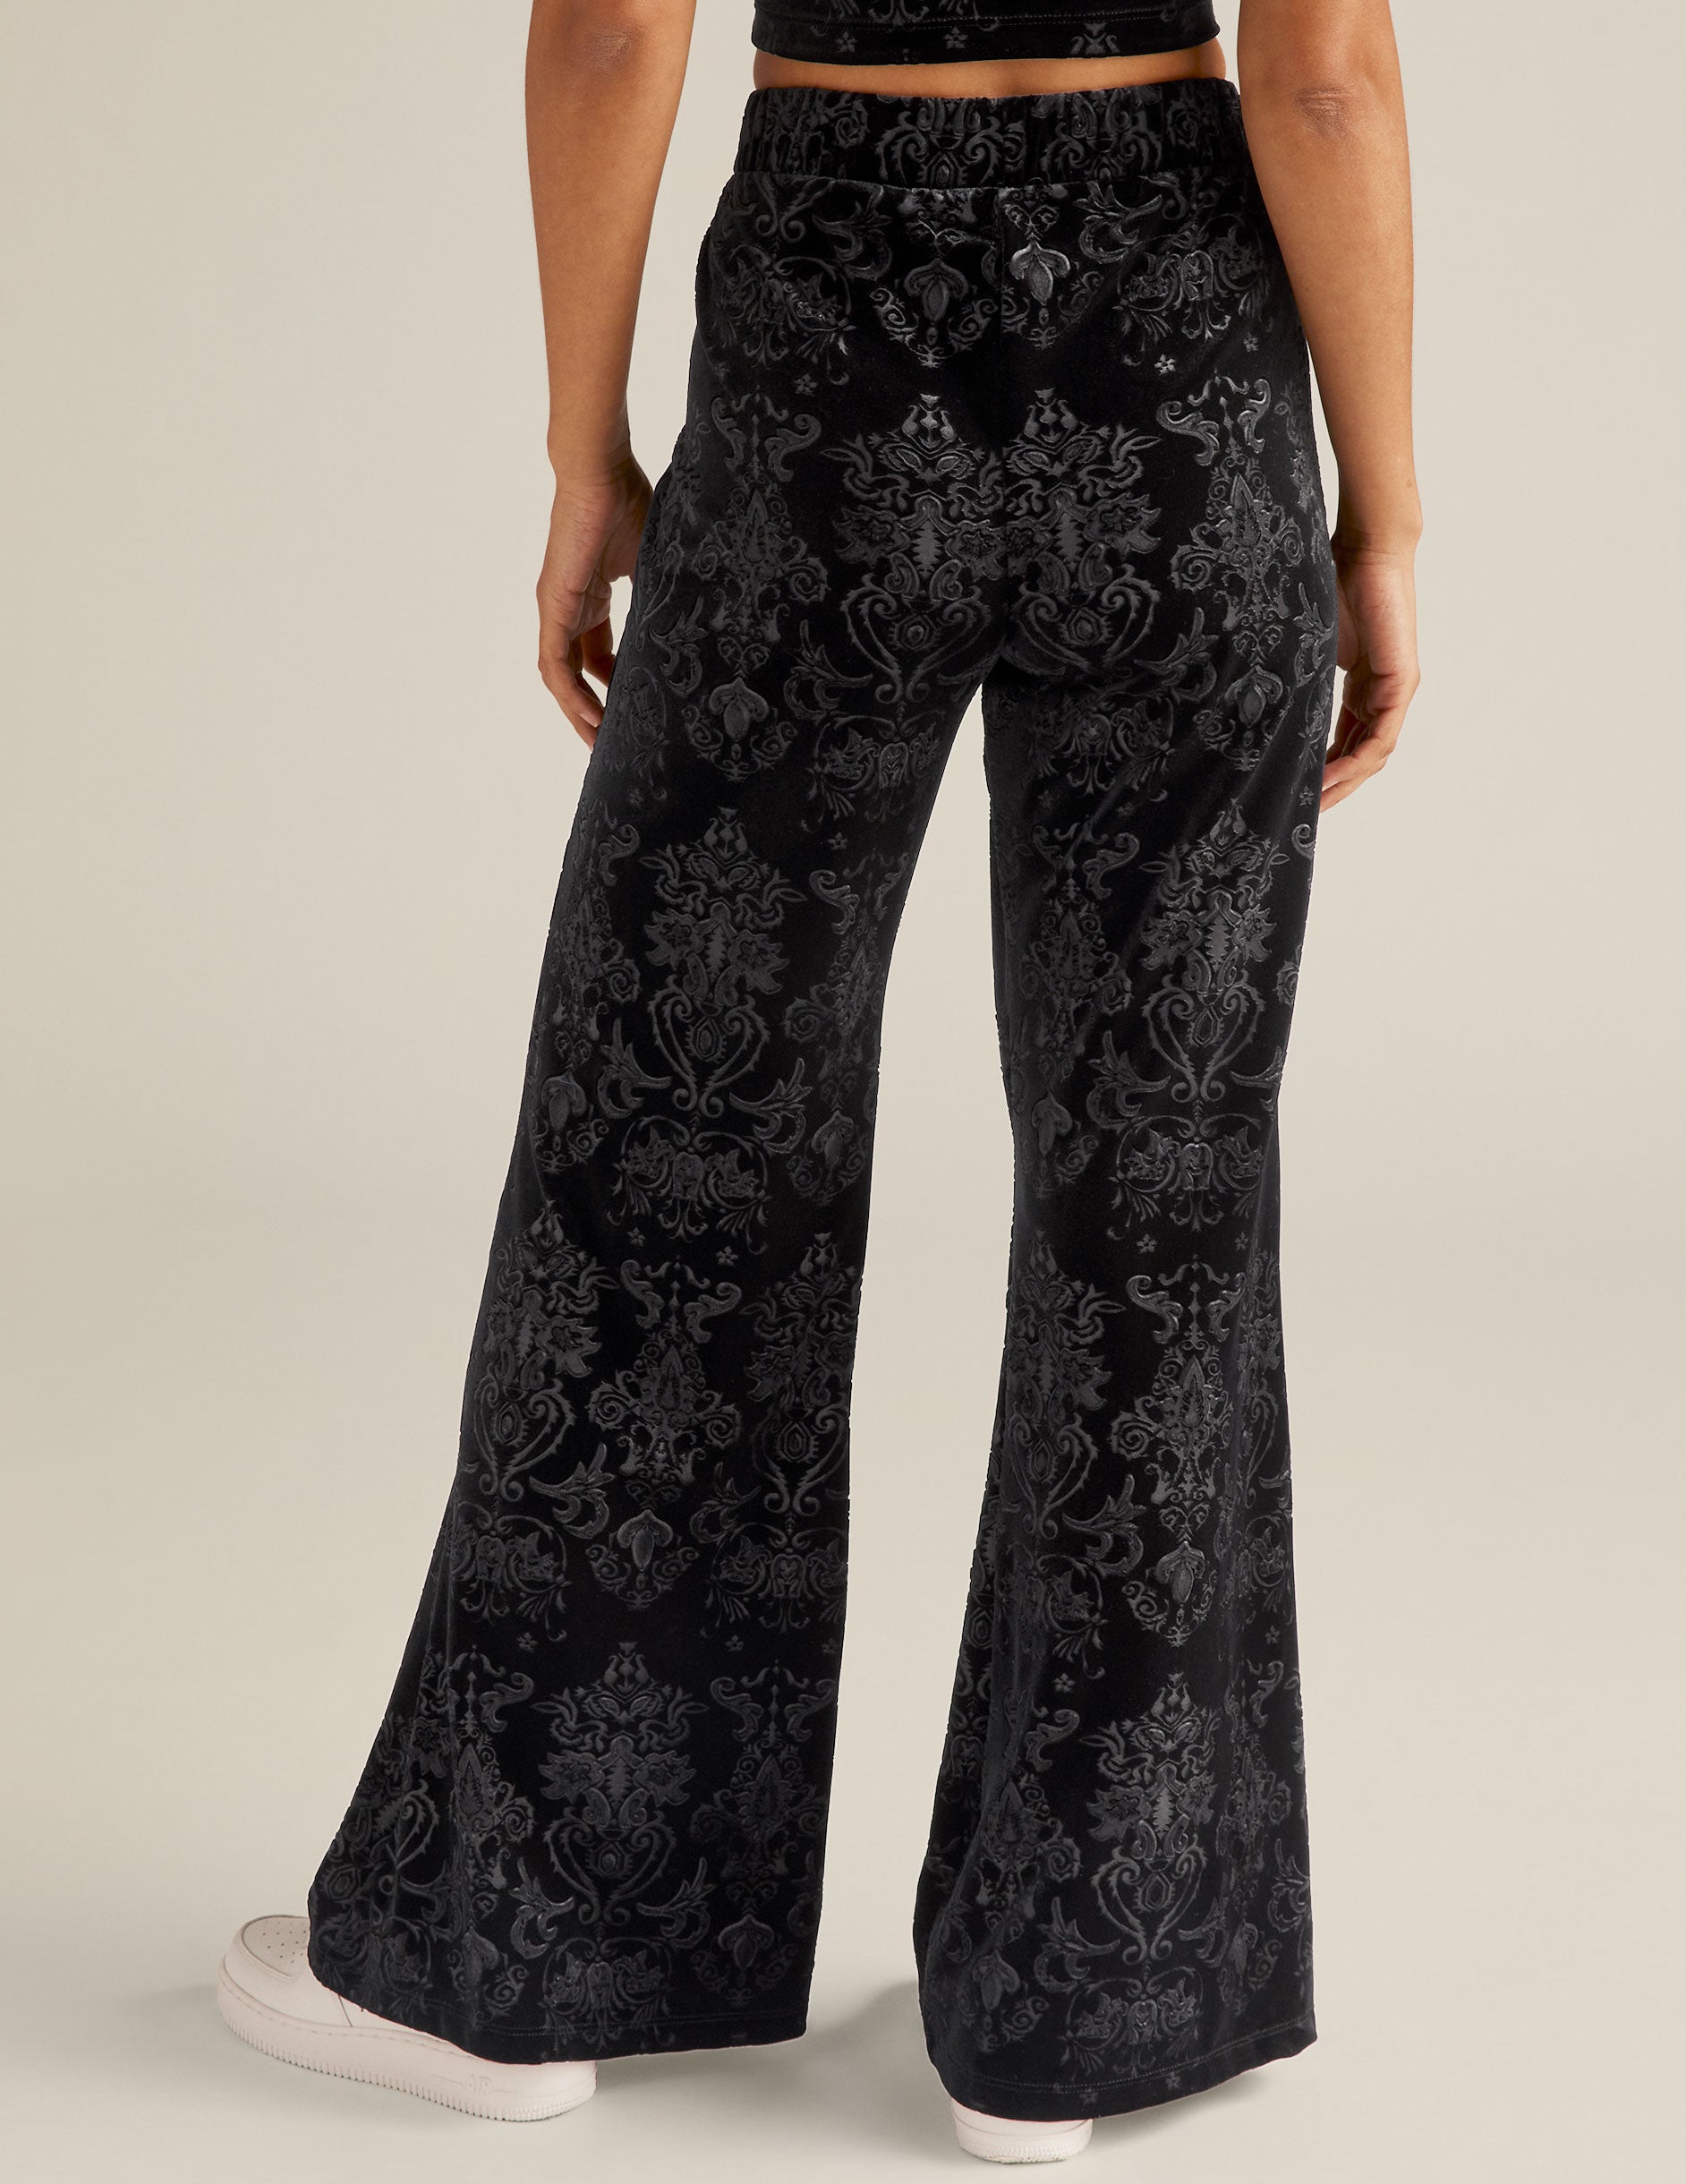 Buy Lace flared trousers online in KSA